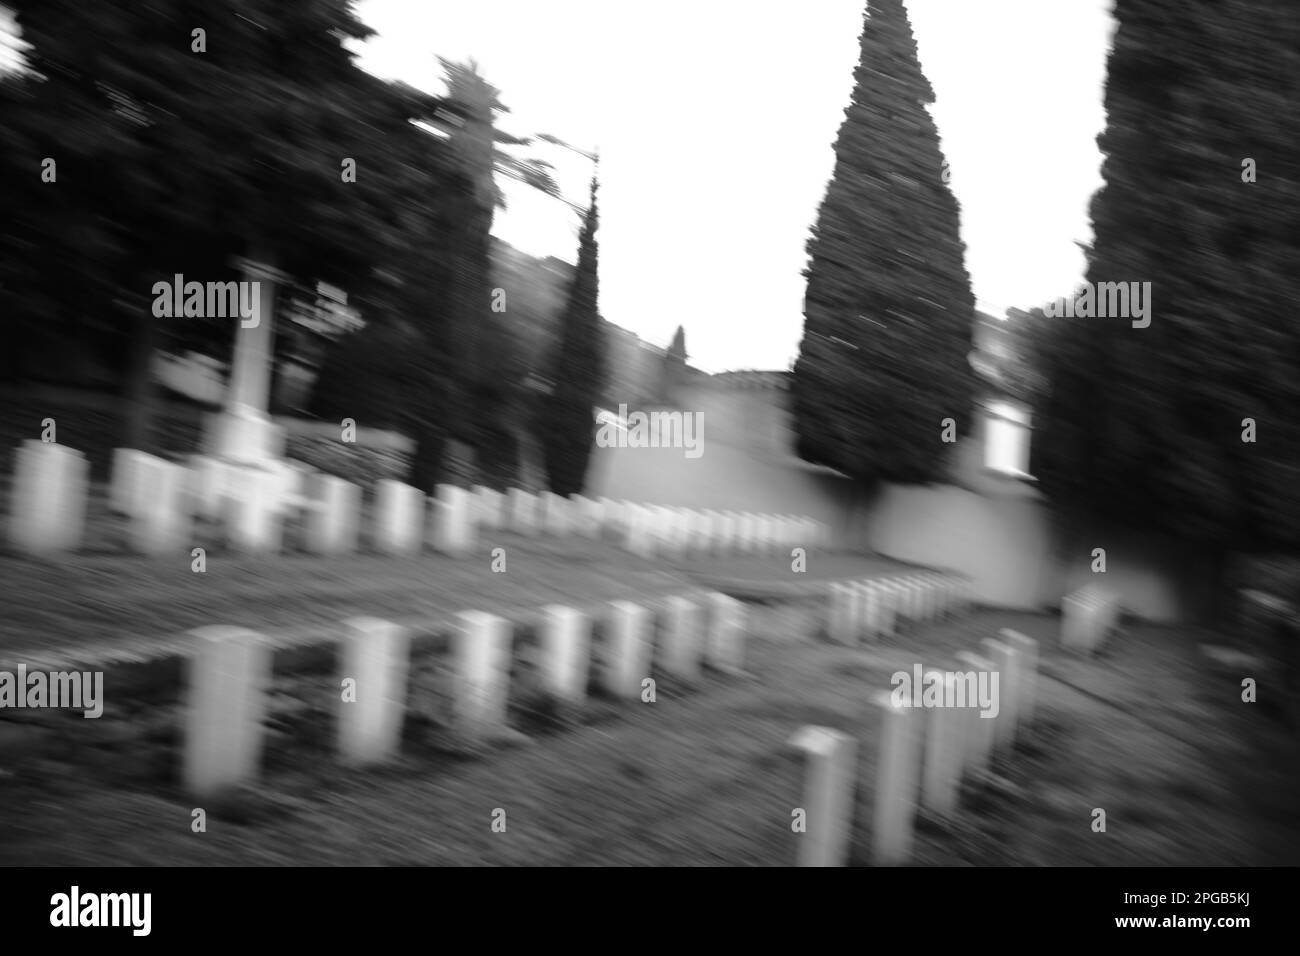 Britischer Soldatenfriedhof Stockfoto